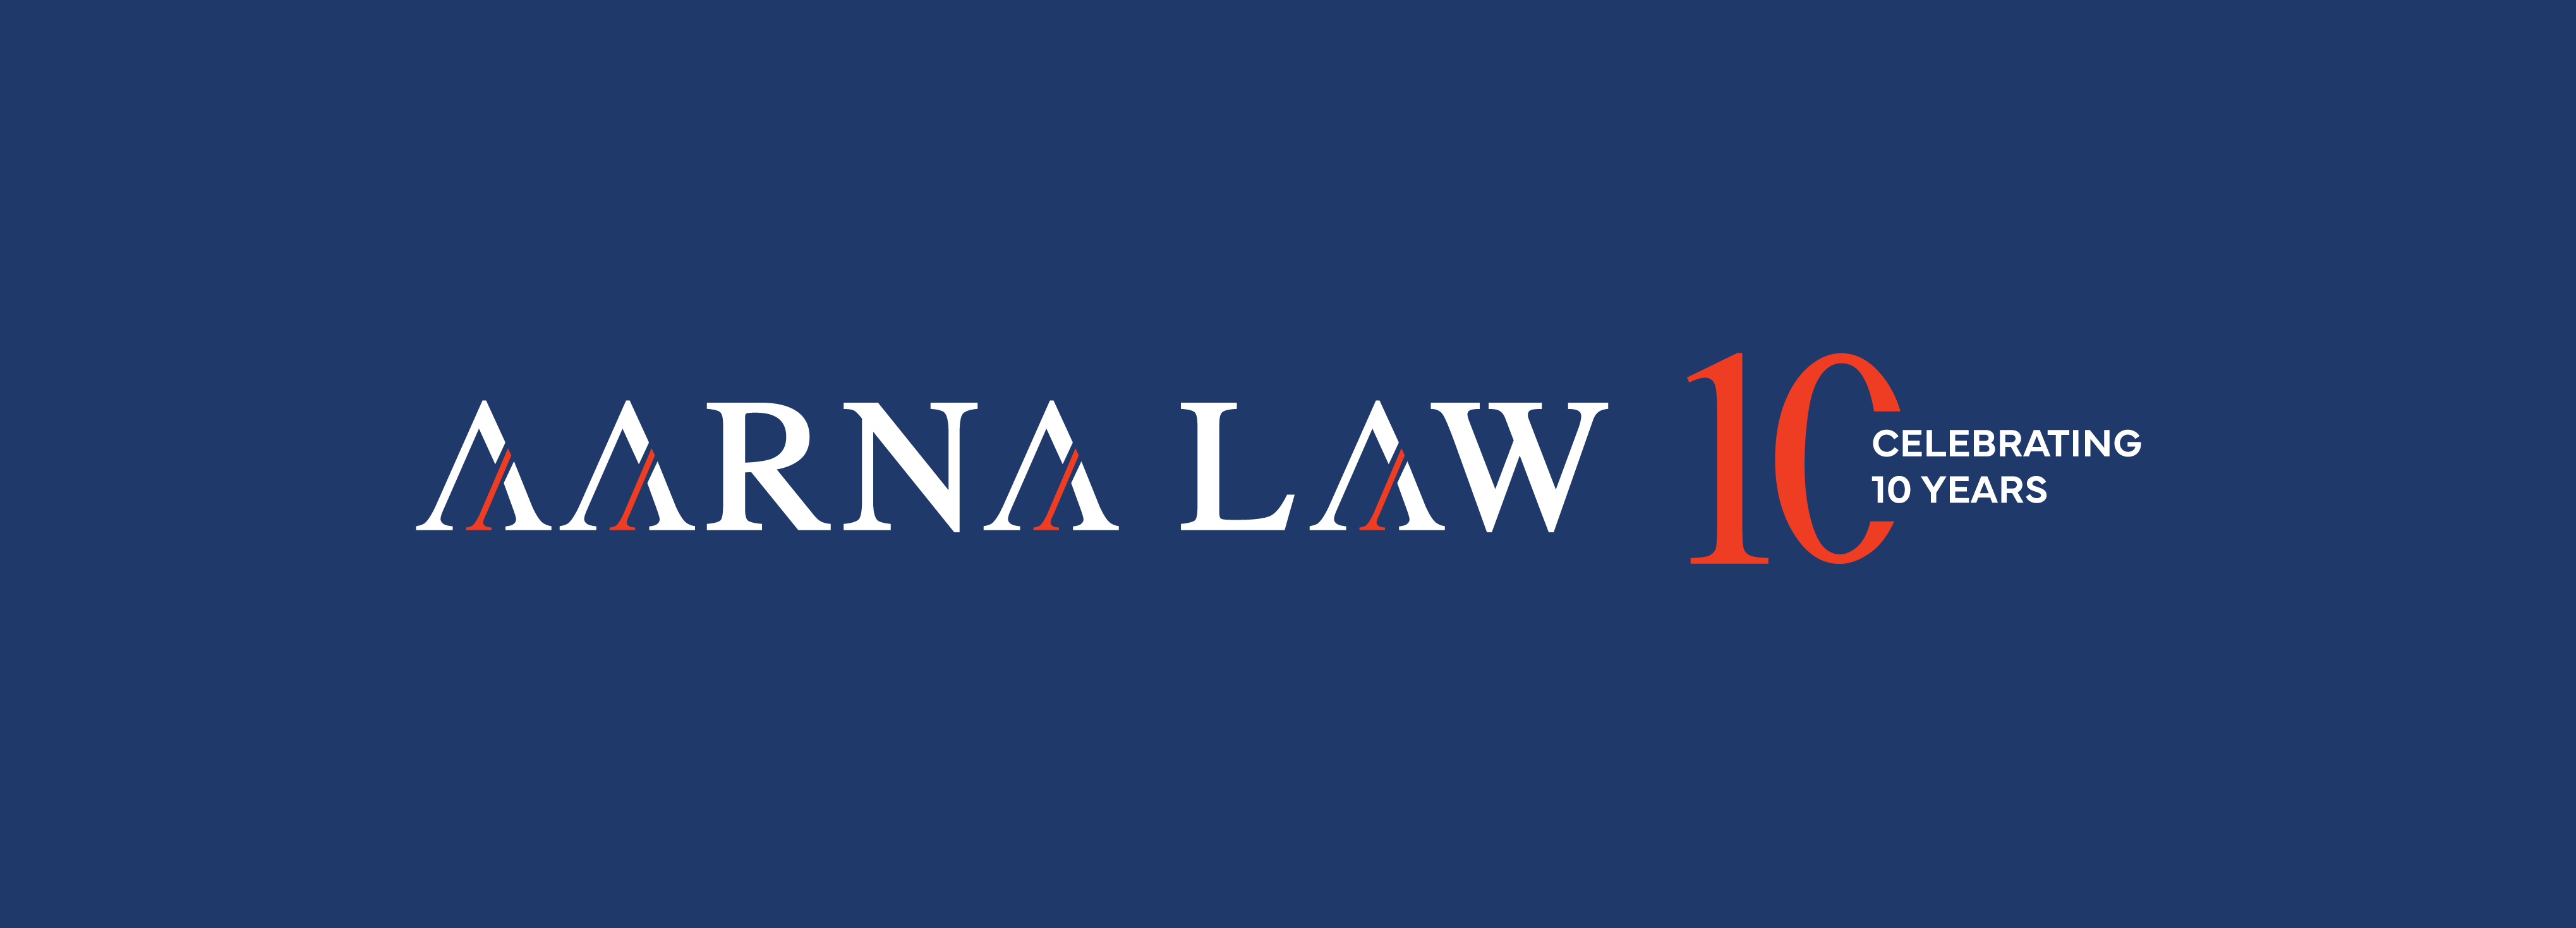 Aarna Law celebrates 10th Anniversary